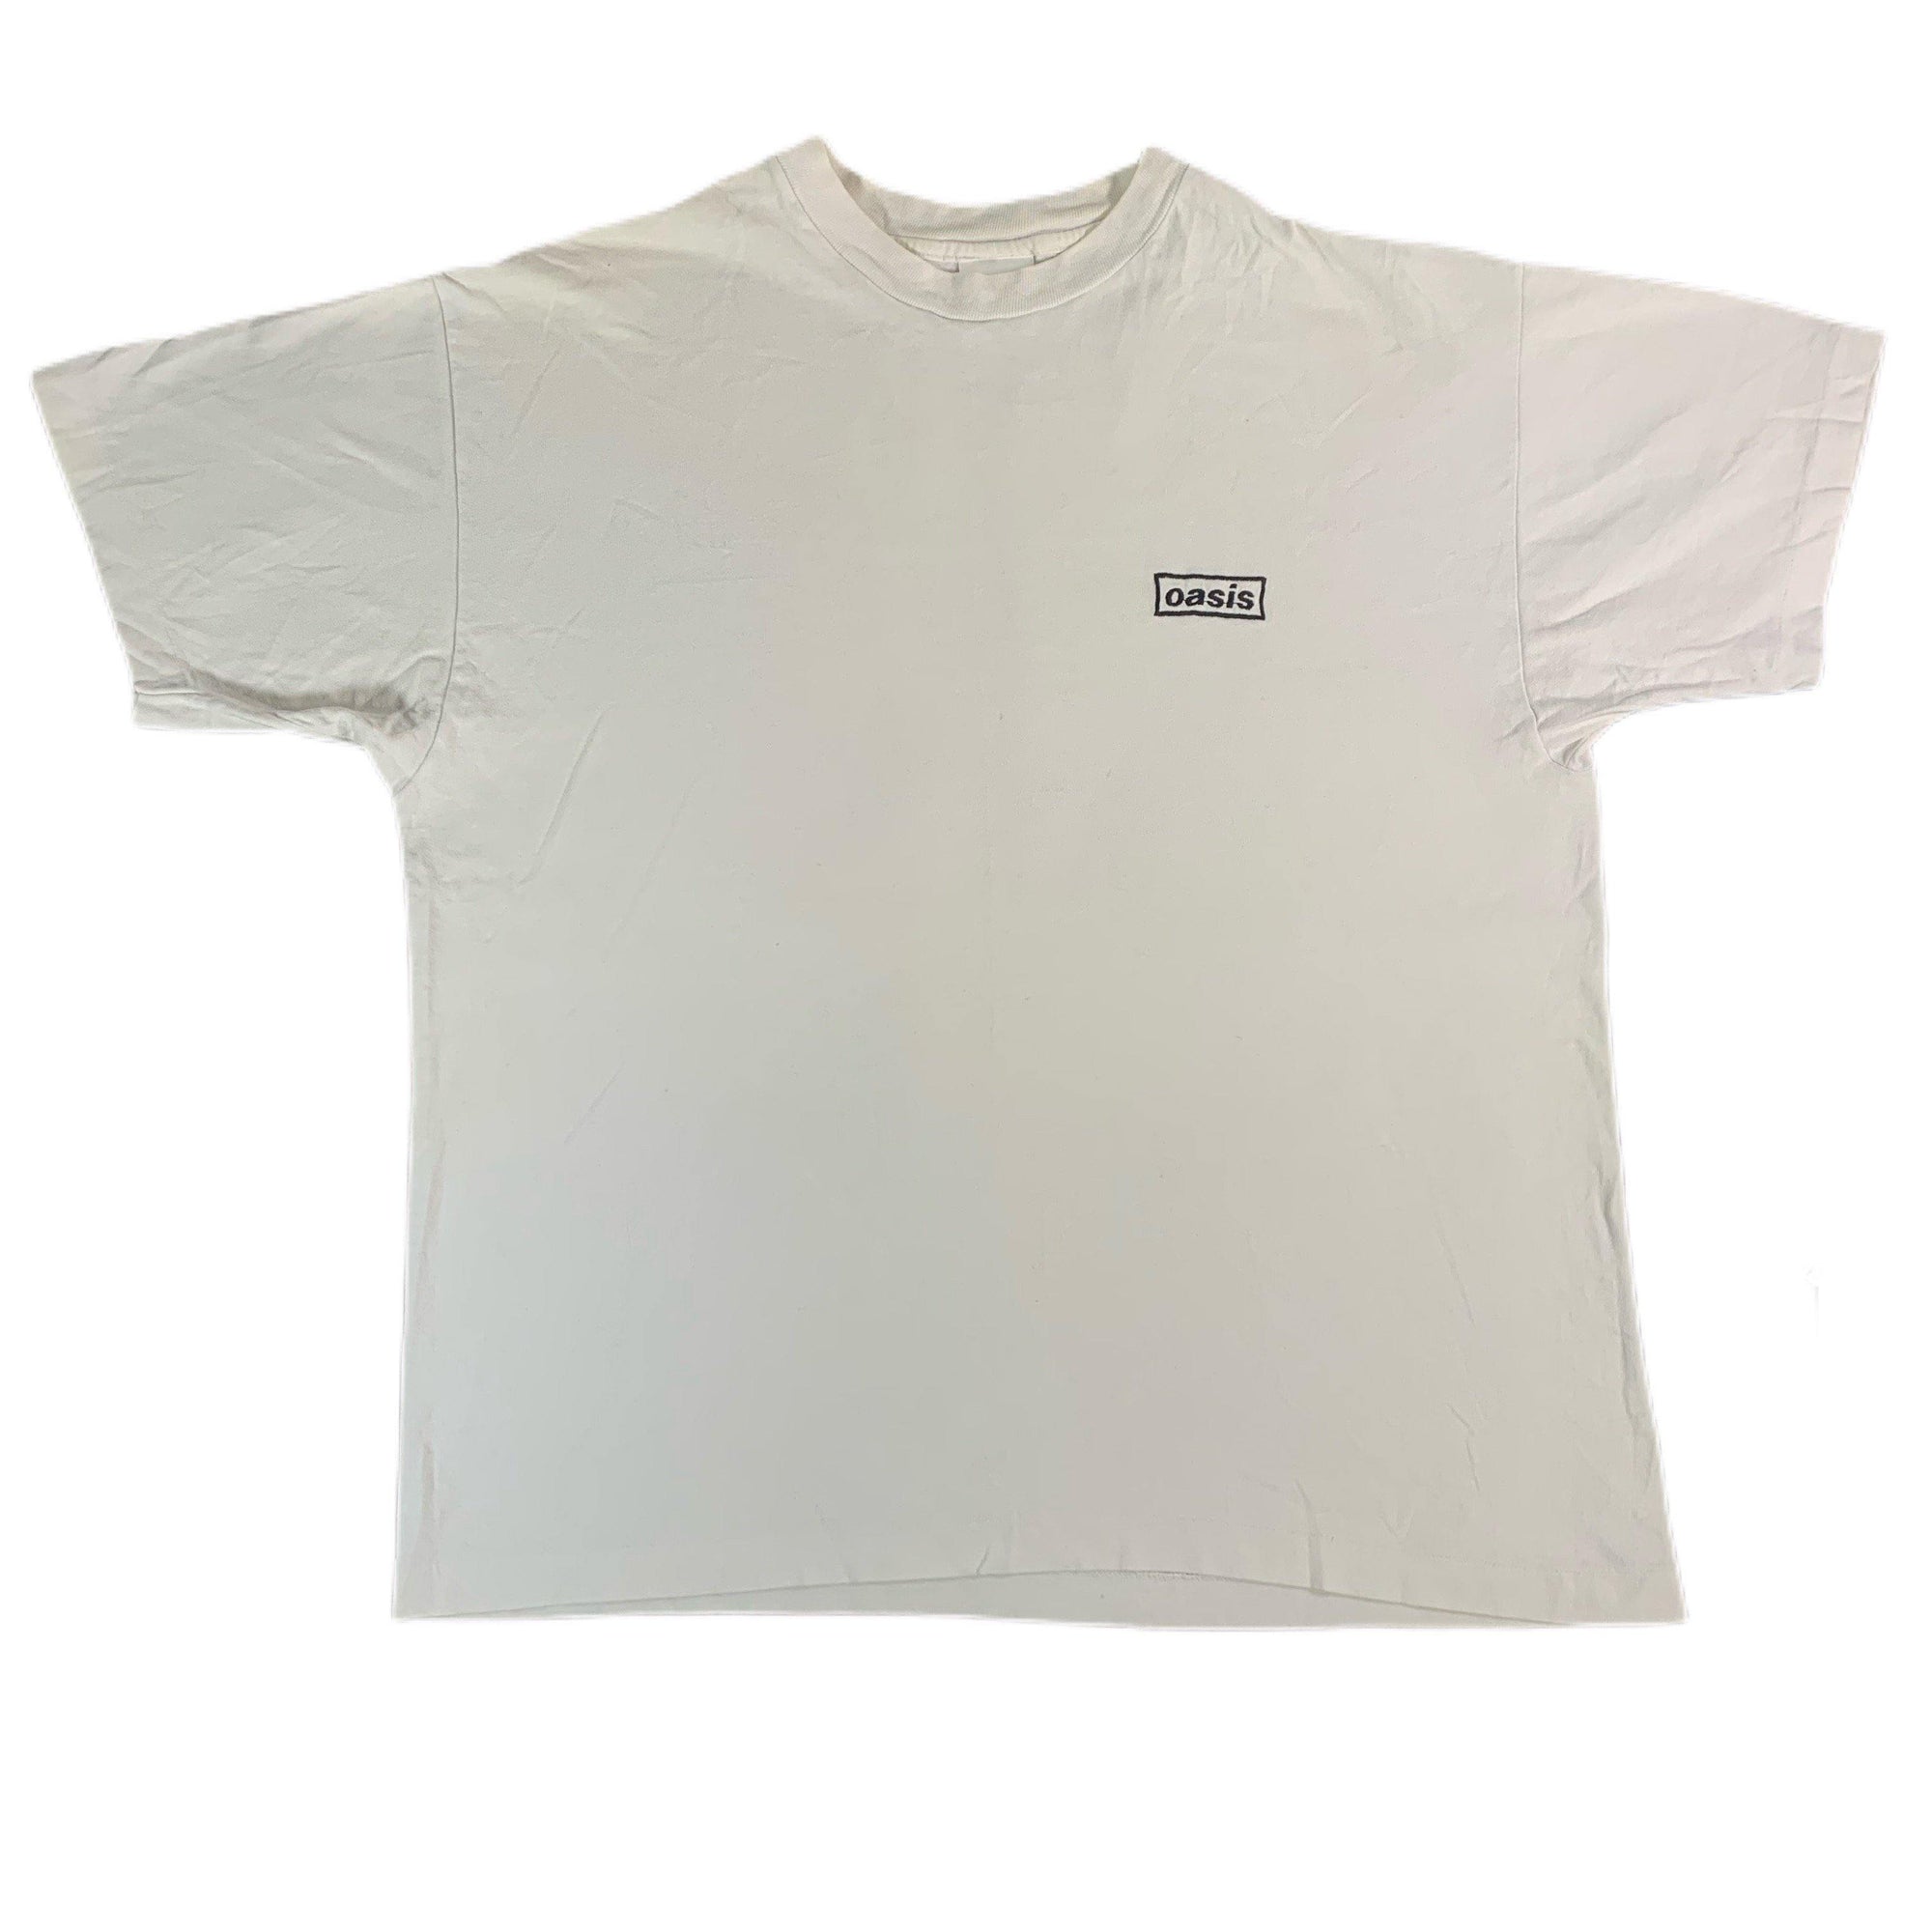 Vintage Oasis "Embroidered" T-Shirt - jointcustodydc